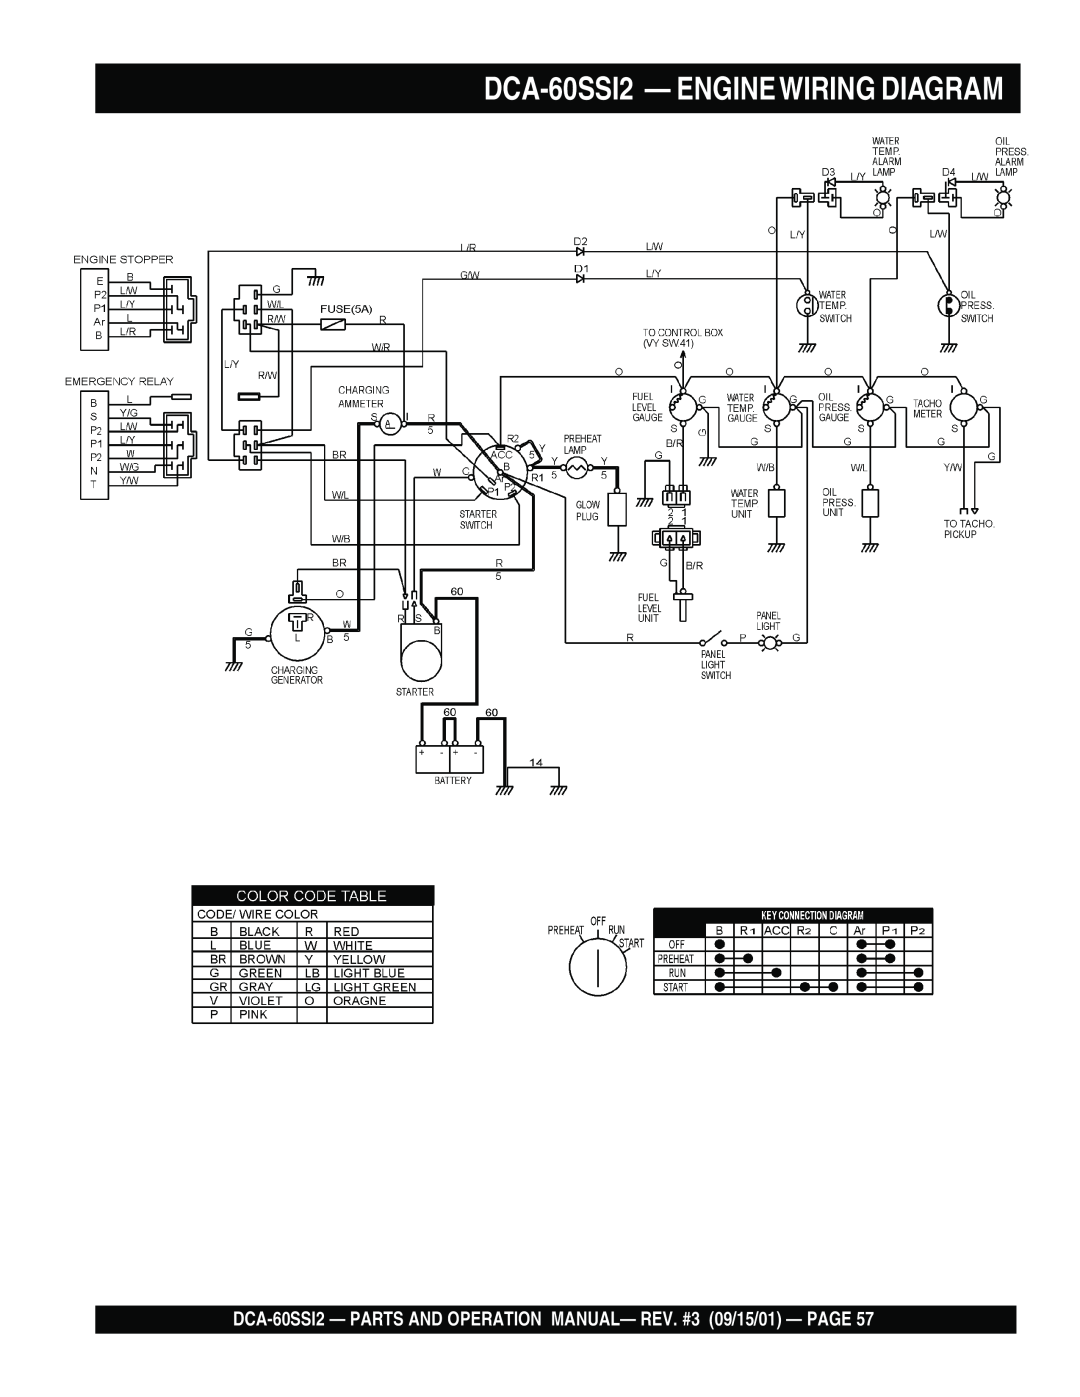 Multiquip DCA-60SS12 operation manual DCA-60SSI2— ENGINEWIRING DIAGRAM 